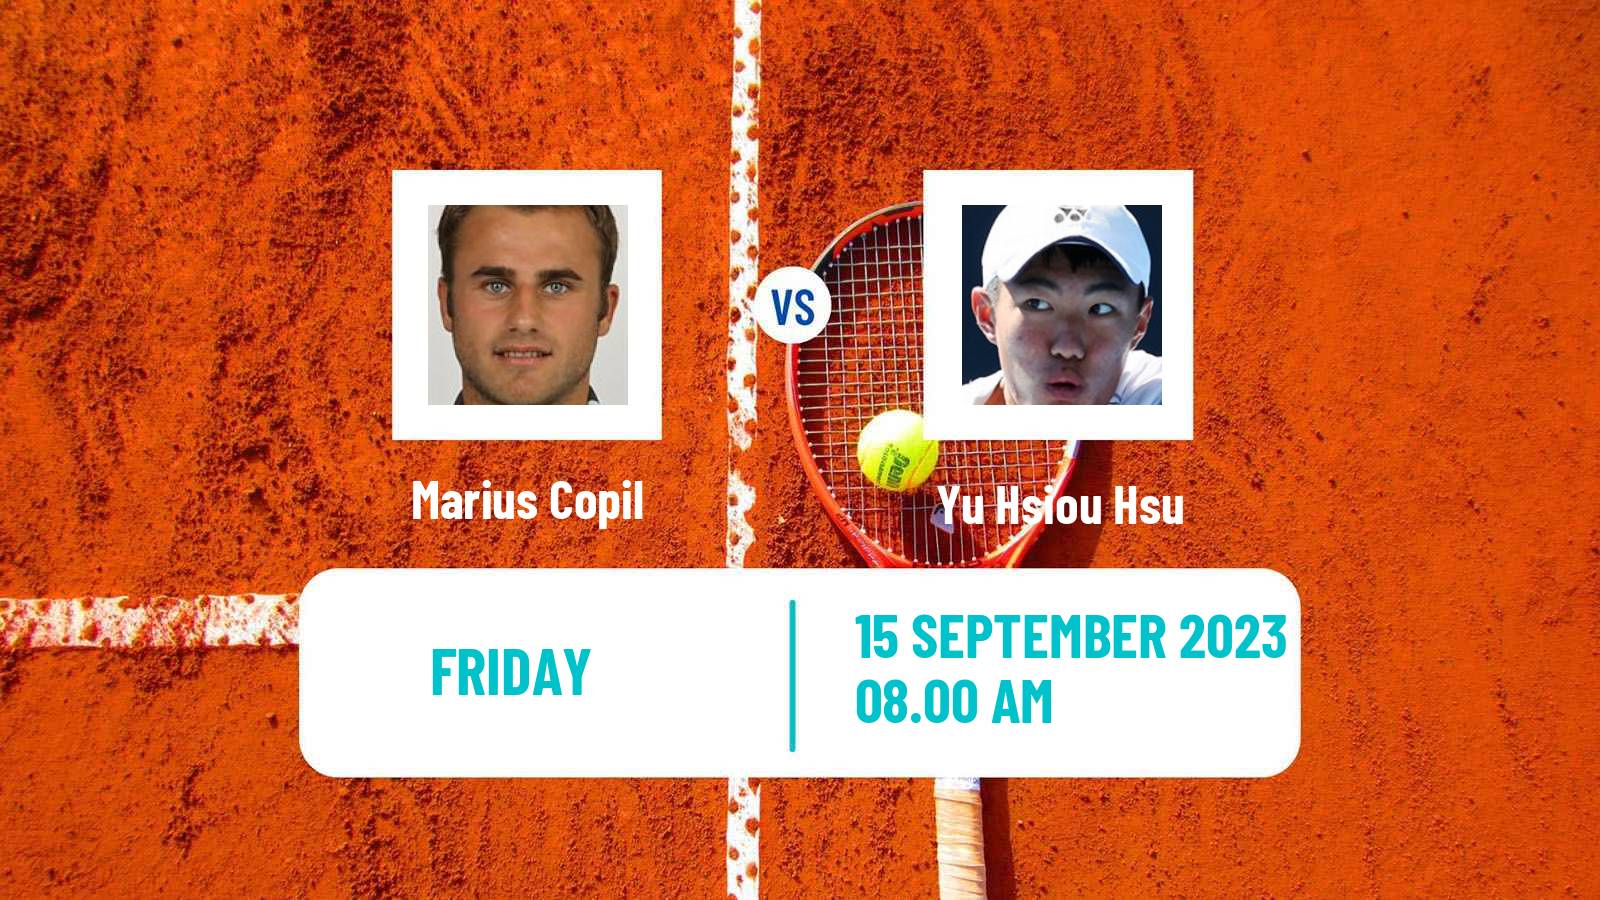 Tennis Davis Cup World Group I Marius Copil - Yu Hsiou Hsu